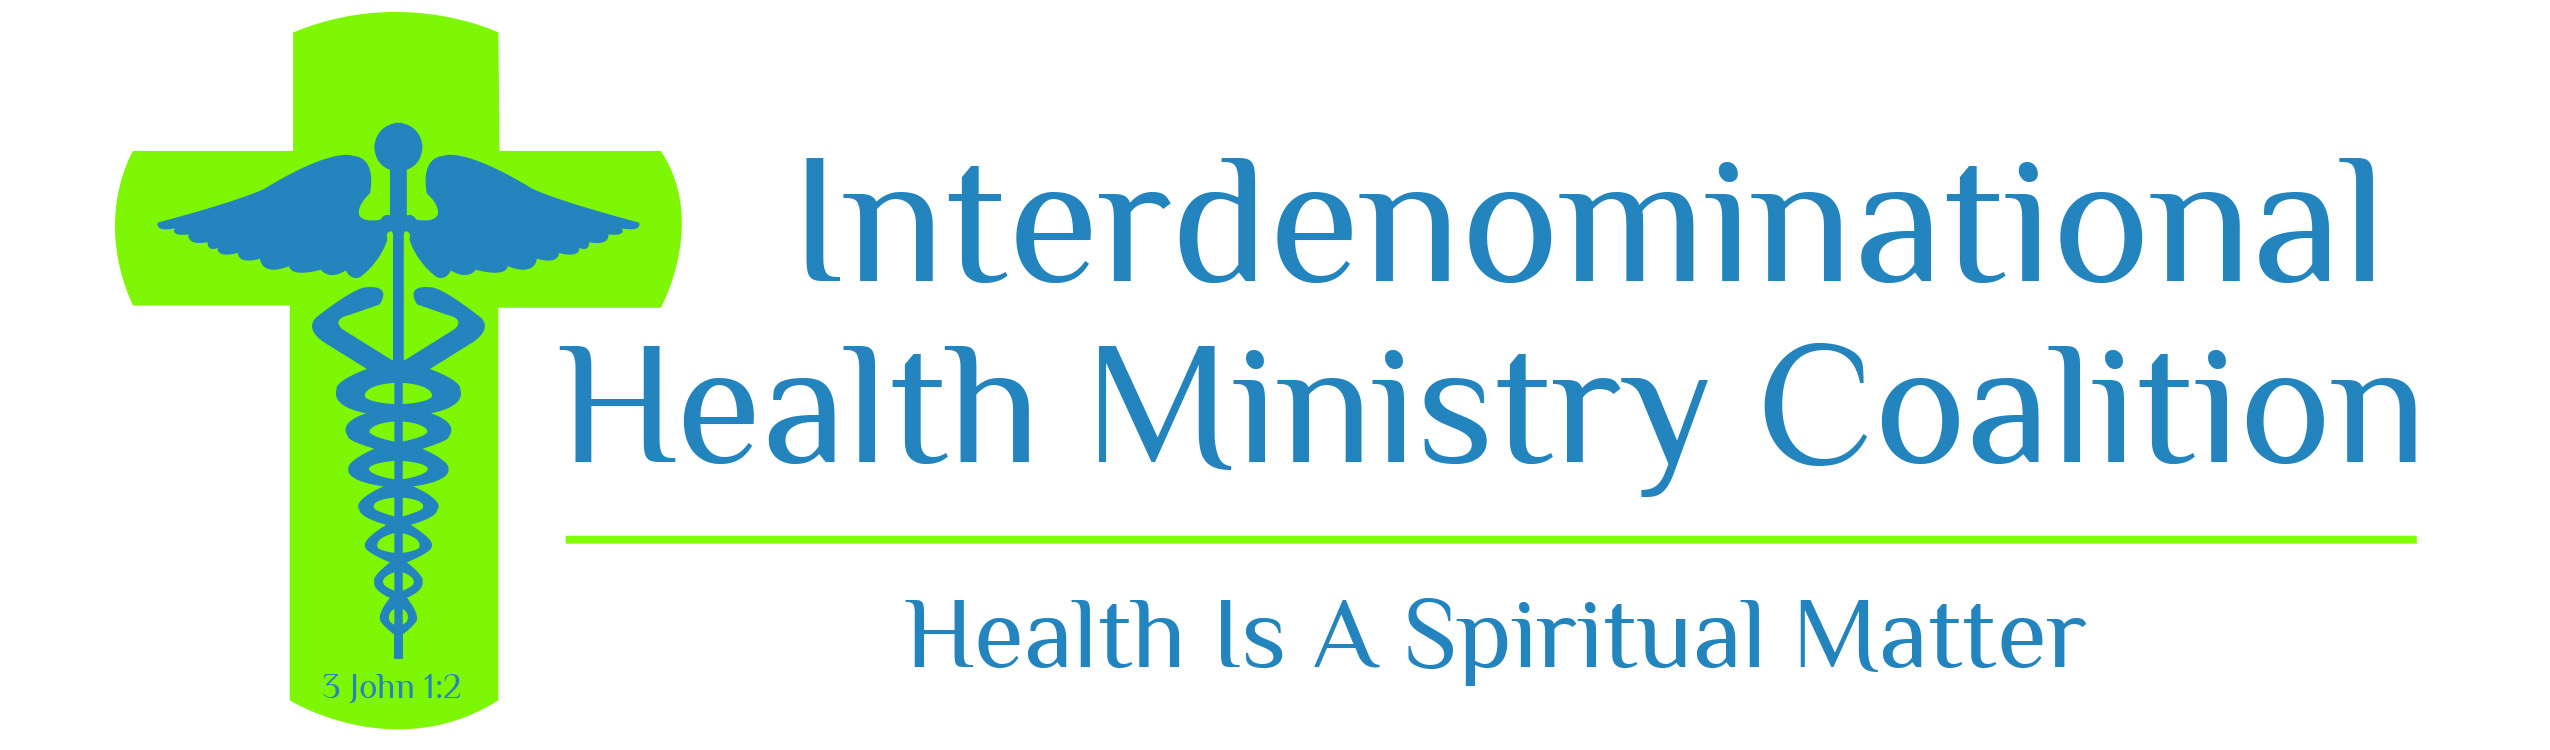 Interdenominational Health Ministry Coalition (IHMC)